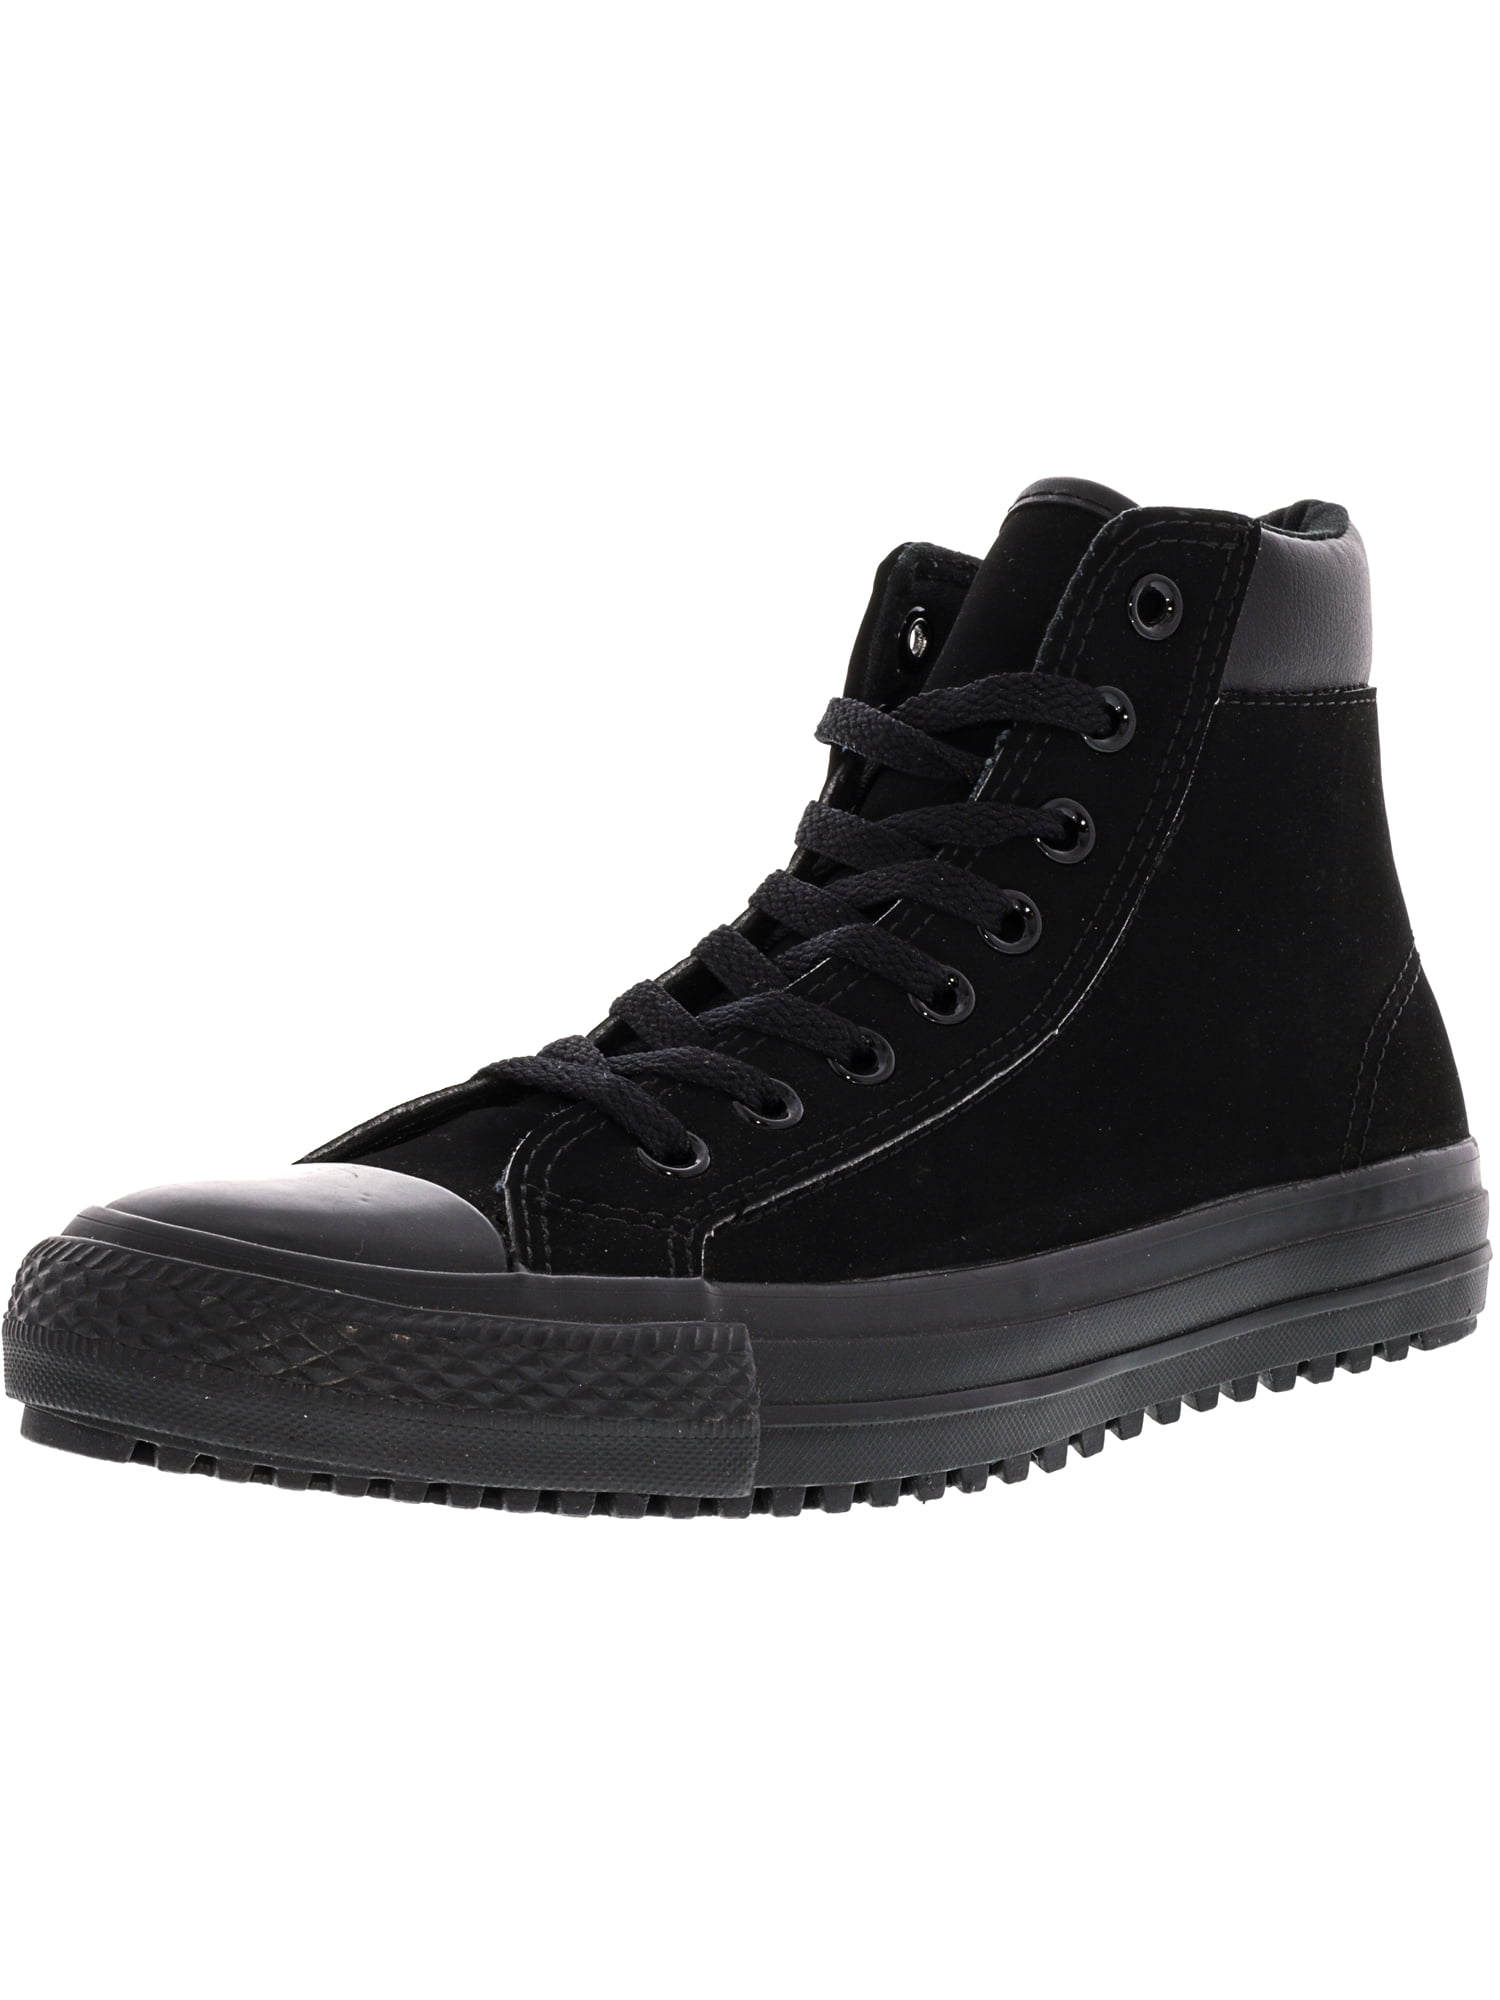 Converse Boot Hi Black / High-Top Fashion Sneaker - 9M 7M | Walmart Canada